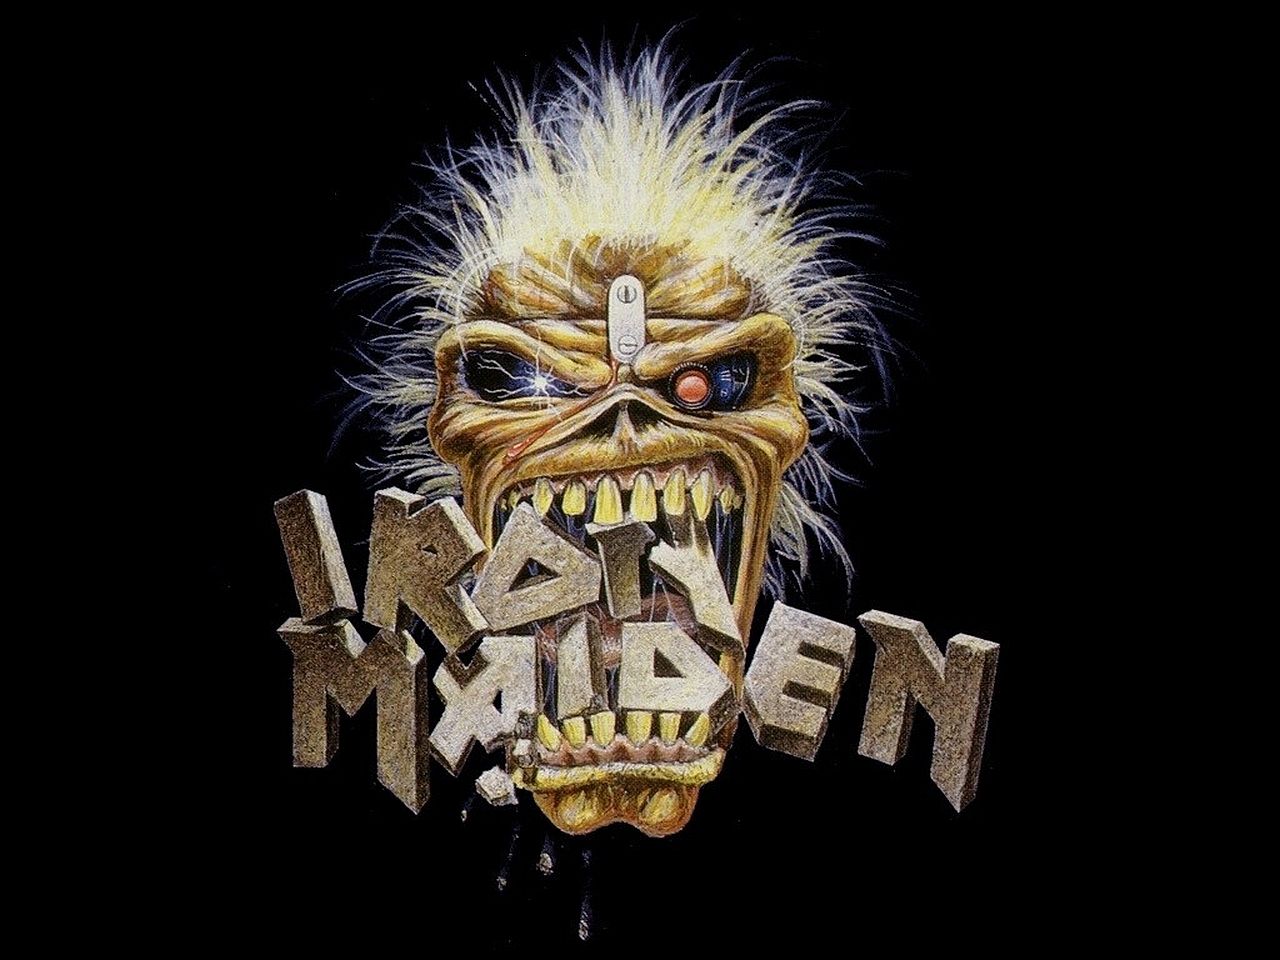 Iron Maiden Puter Wallpaper Desktop Background Id